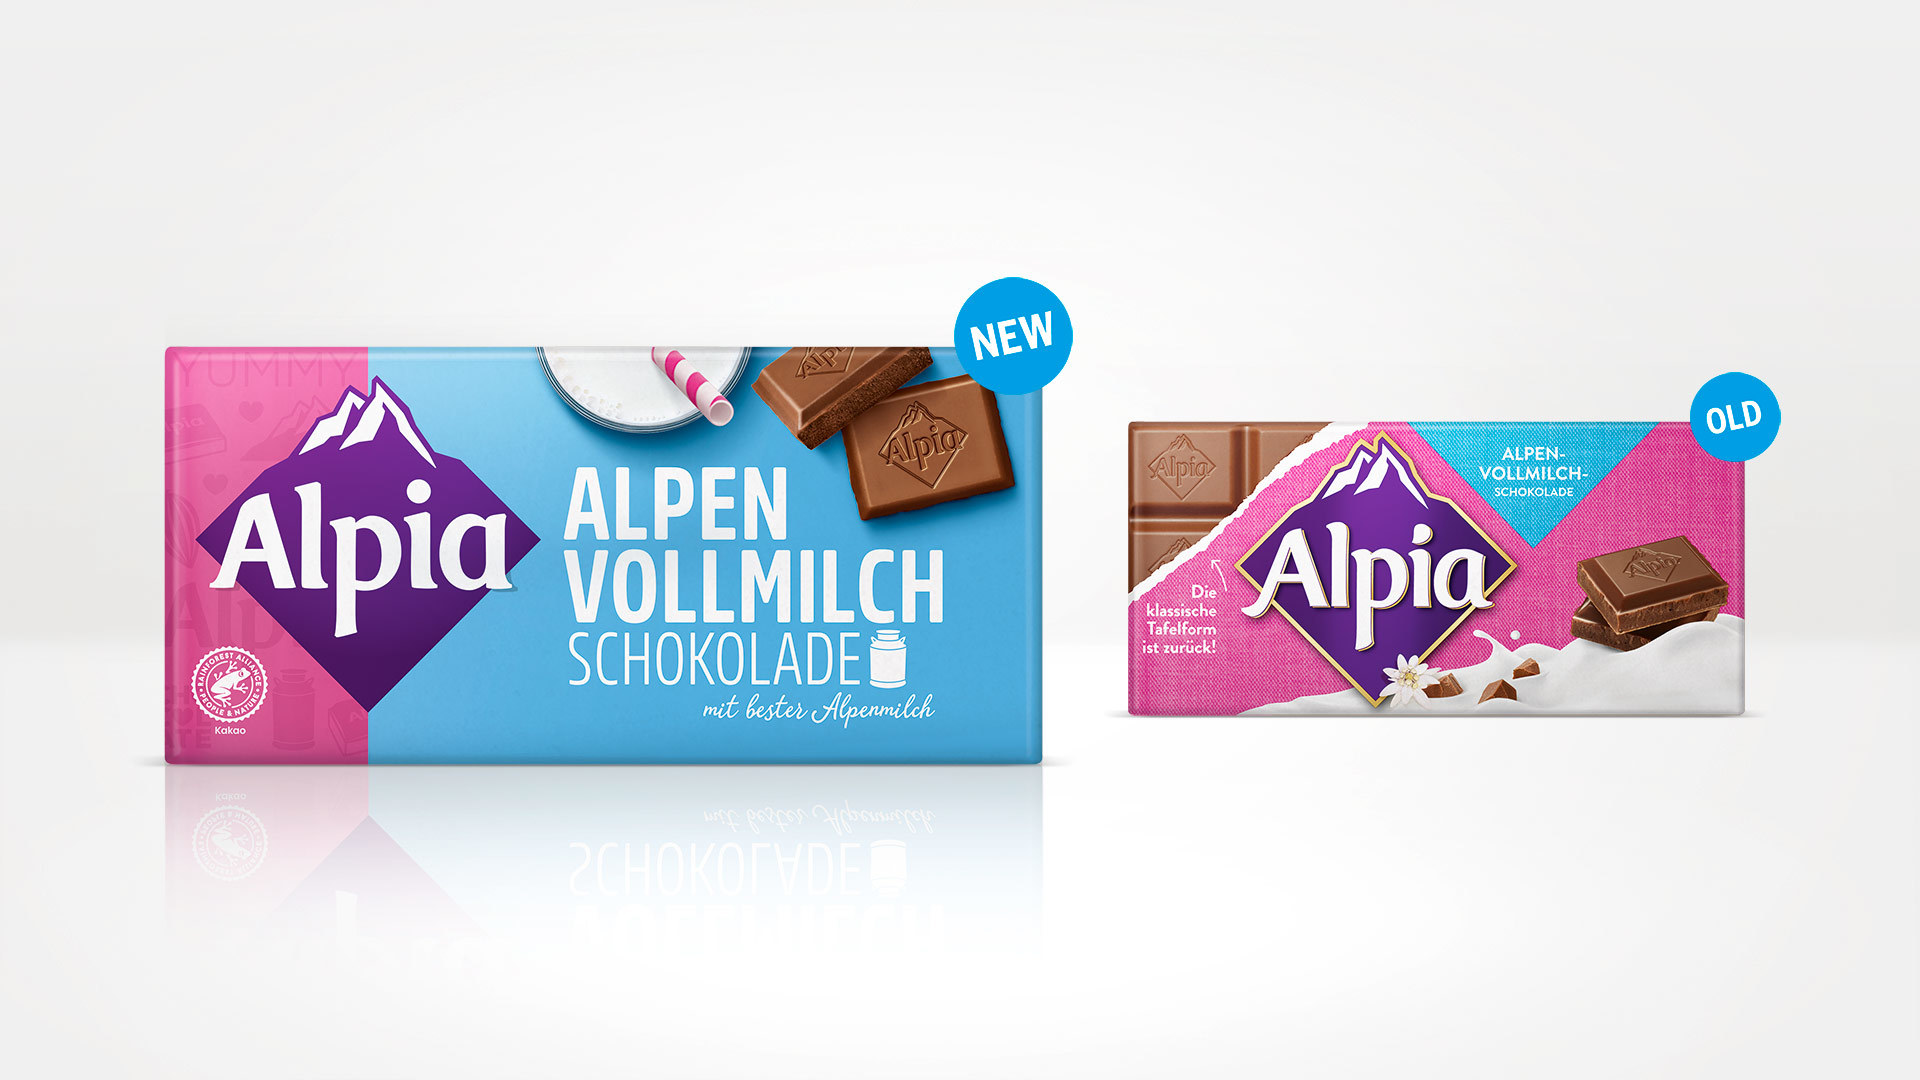 alpia-schokolade-packaging-relaunch-hajok.jpg#asset:4175